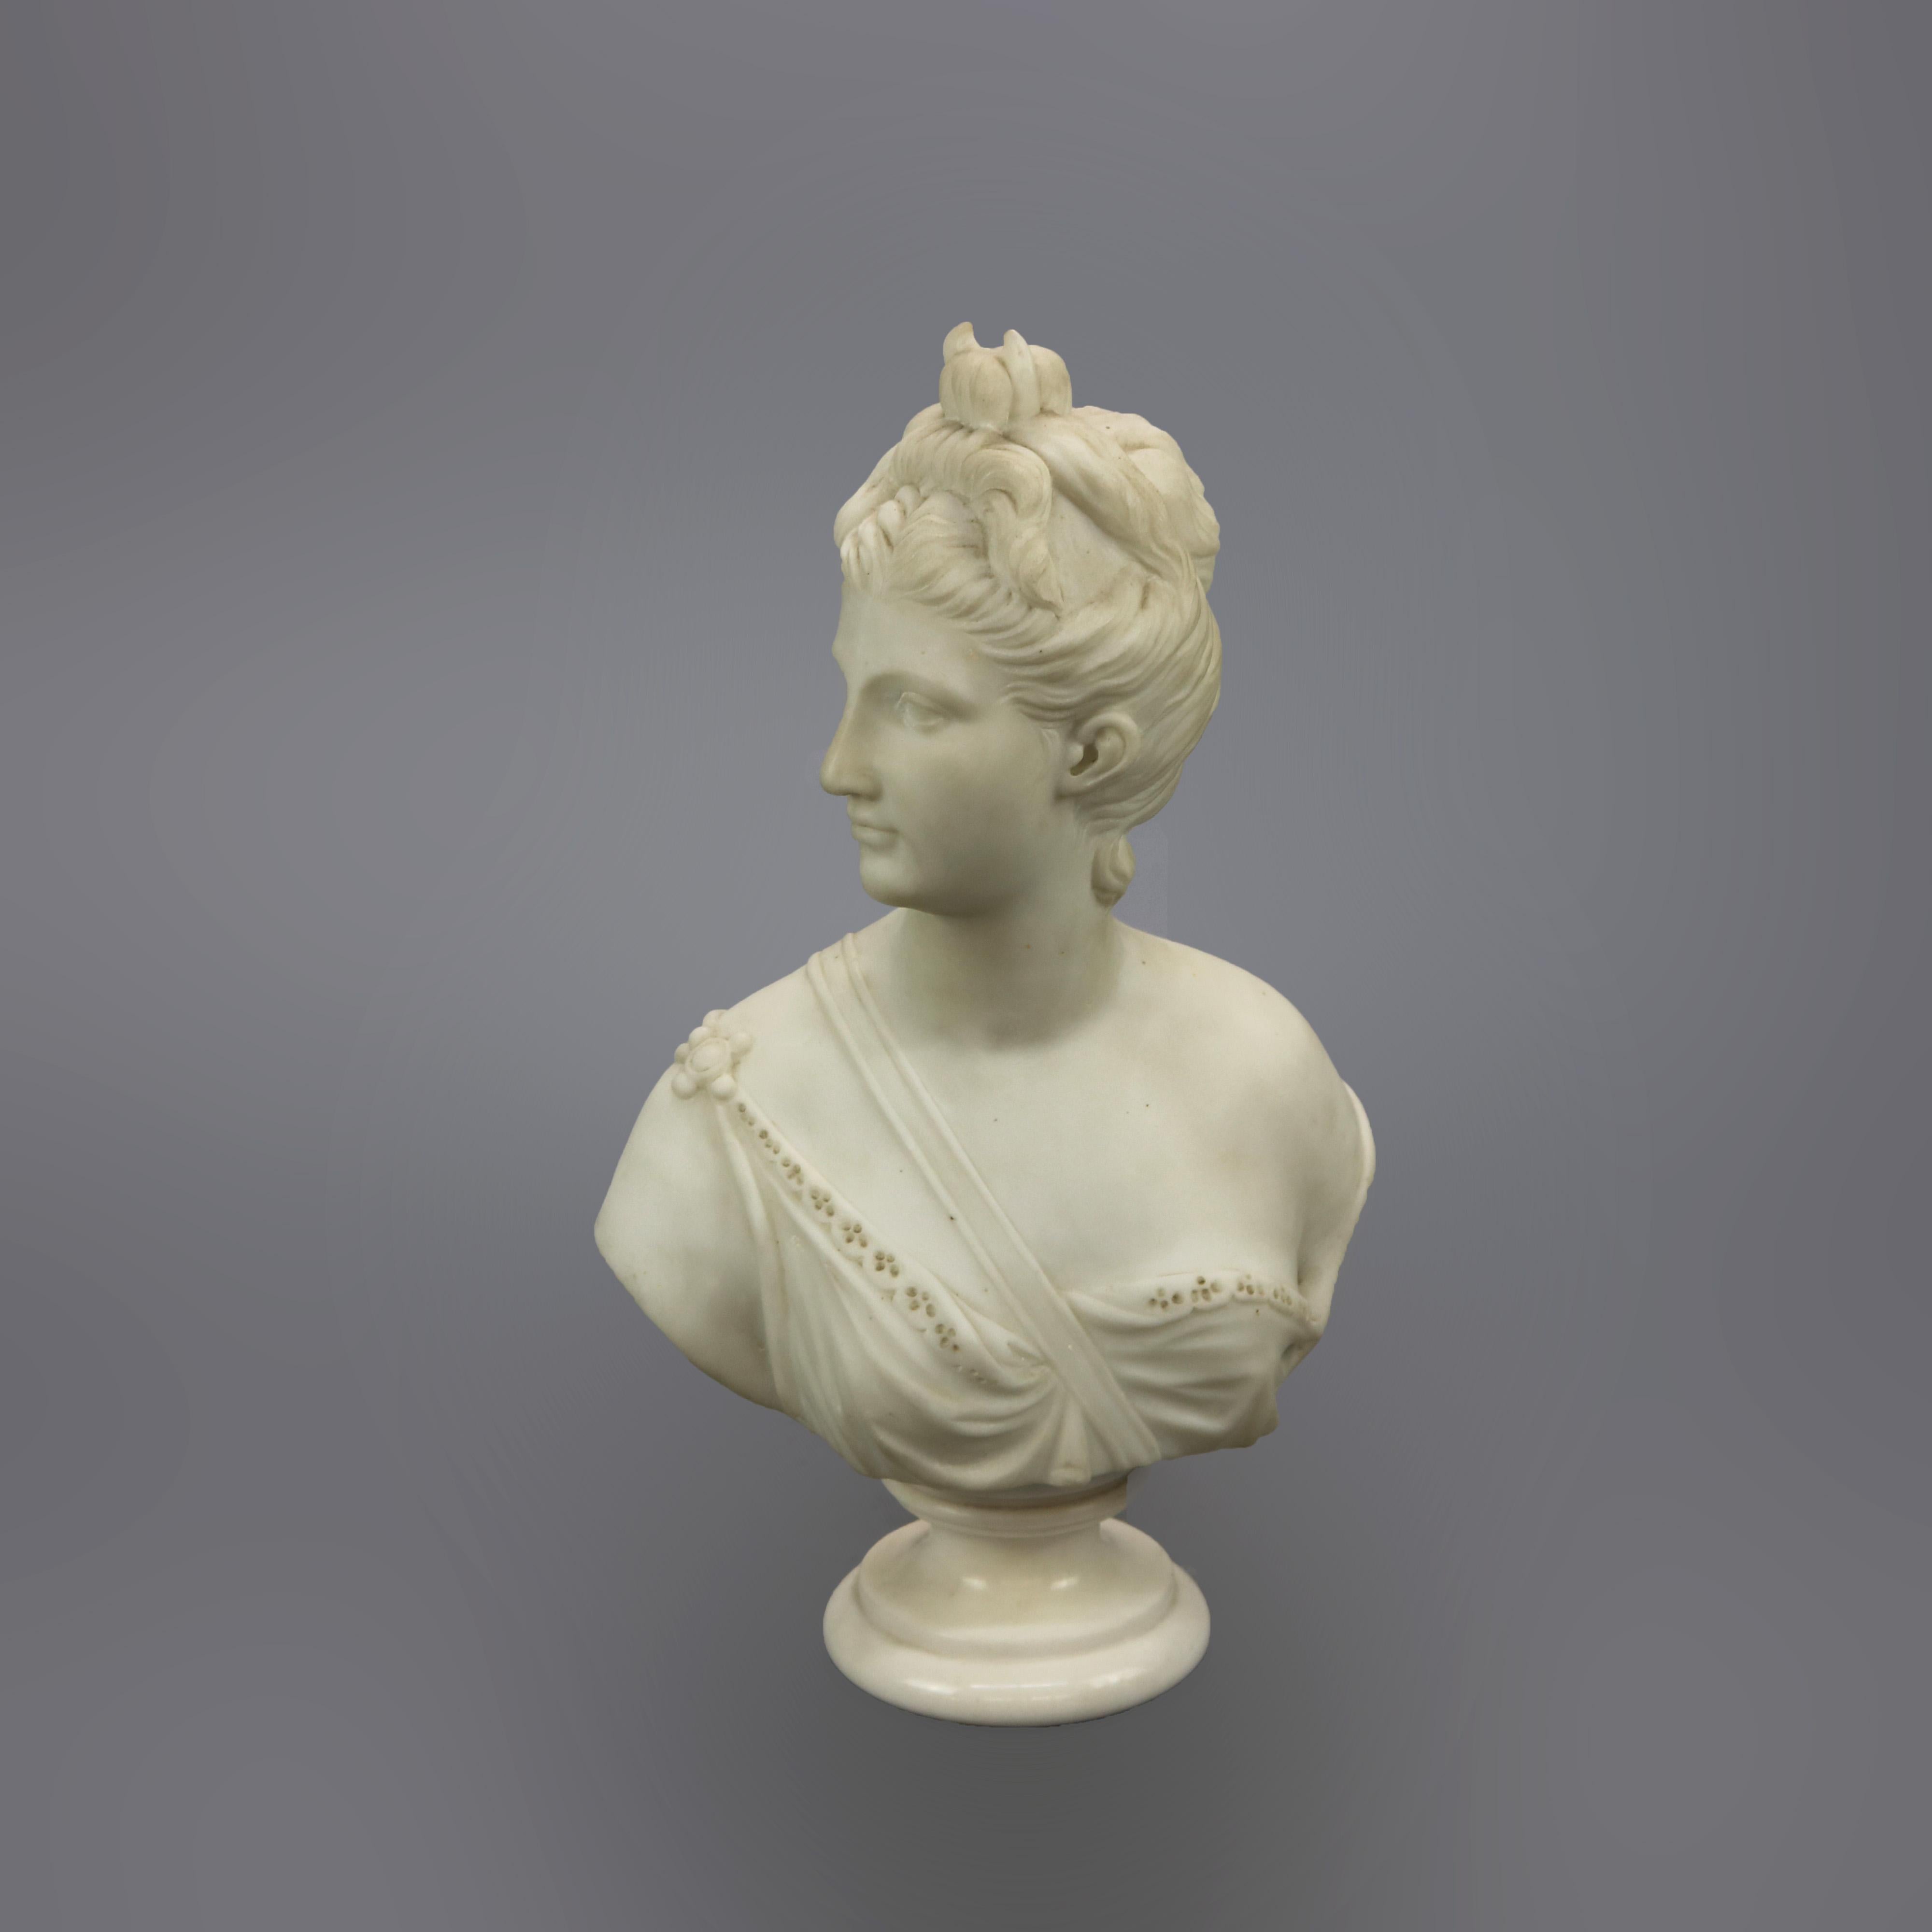 European Antique Classical Carved Alabaster Sculpture of Roman Diana the Huntress, c1890